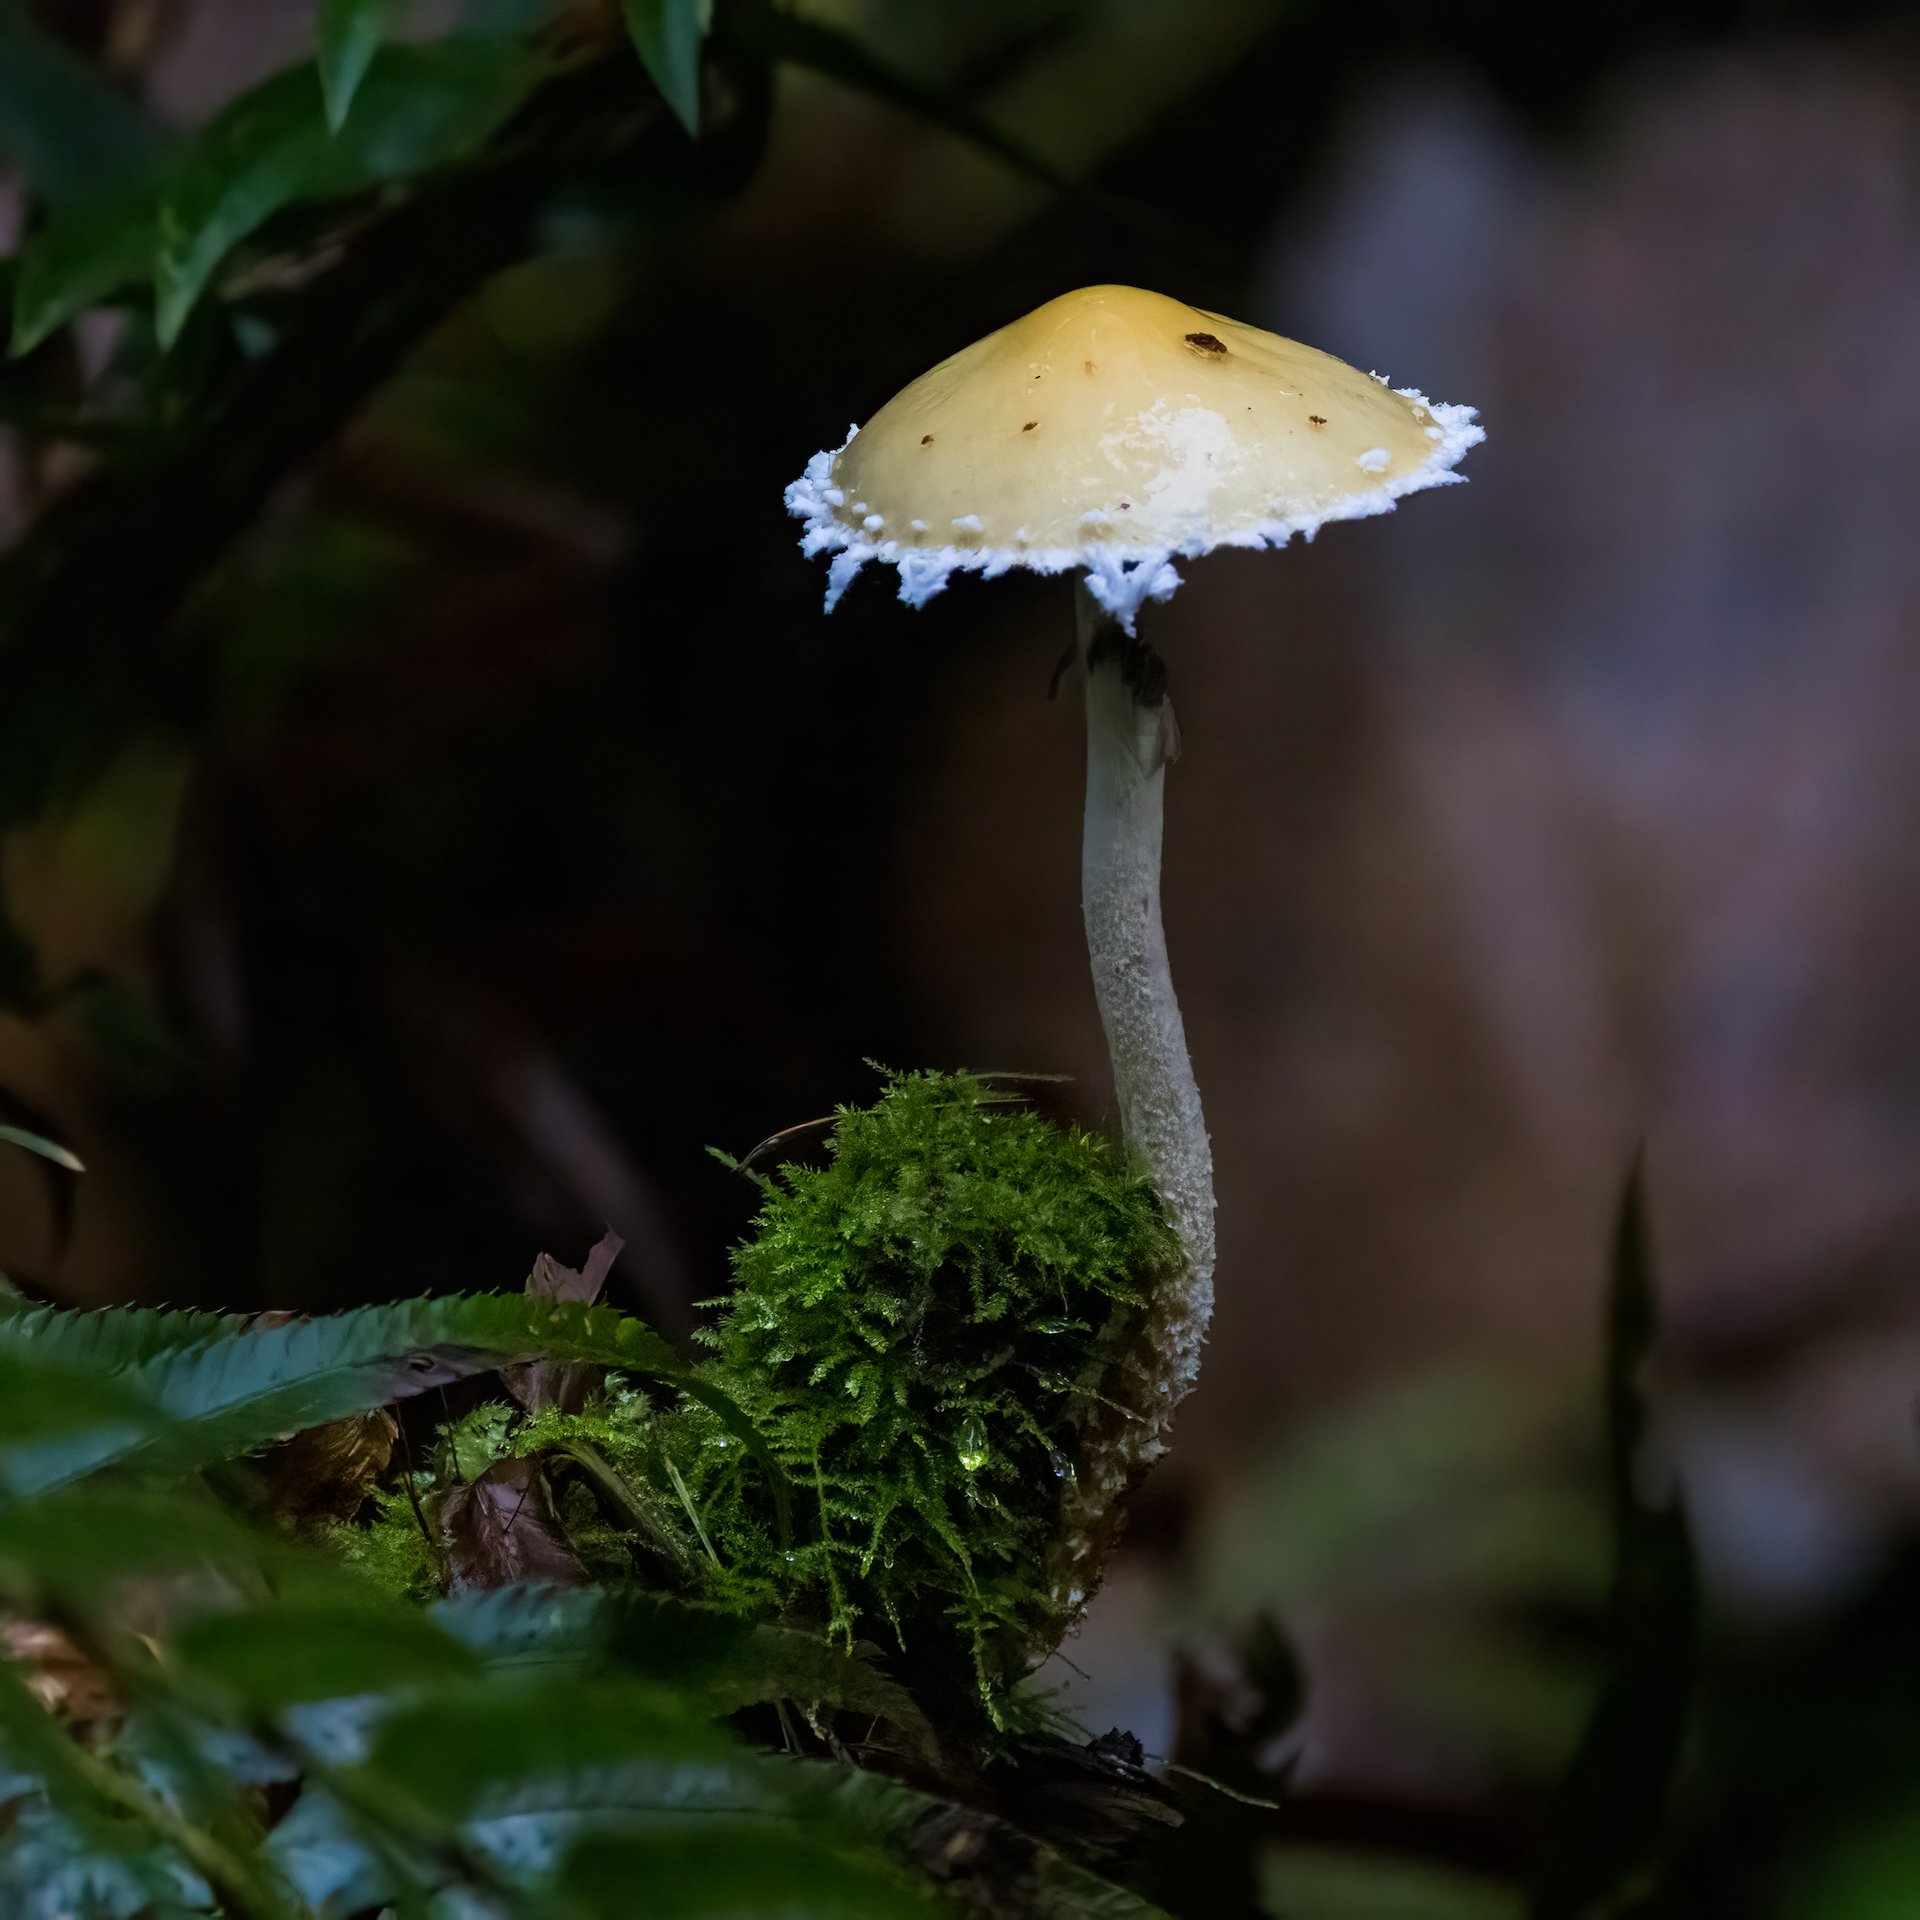  A cool little mushroom 